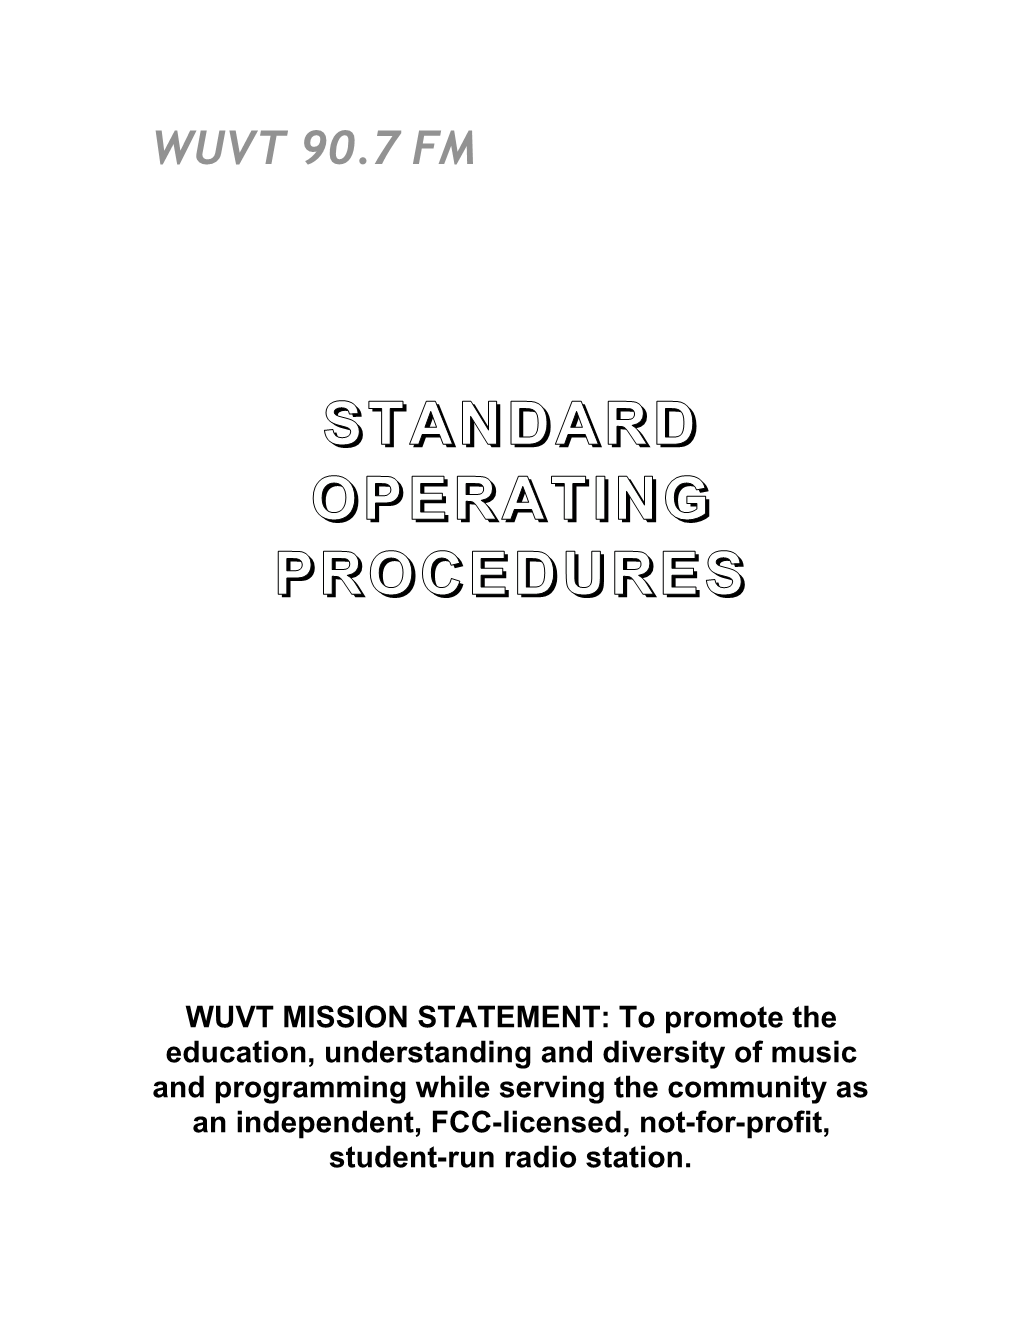 Standard Operating Procedures Revised 09/25/03, 2/17/06, 3/2/07